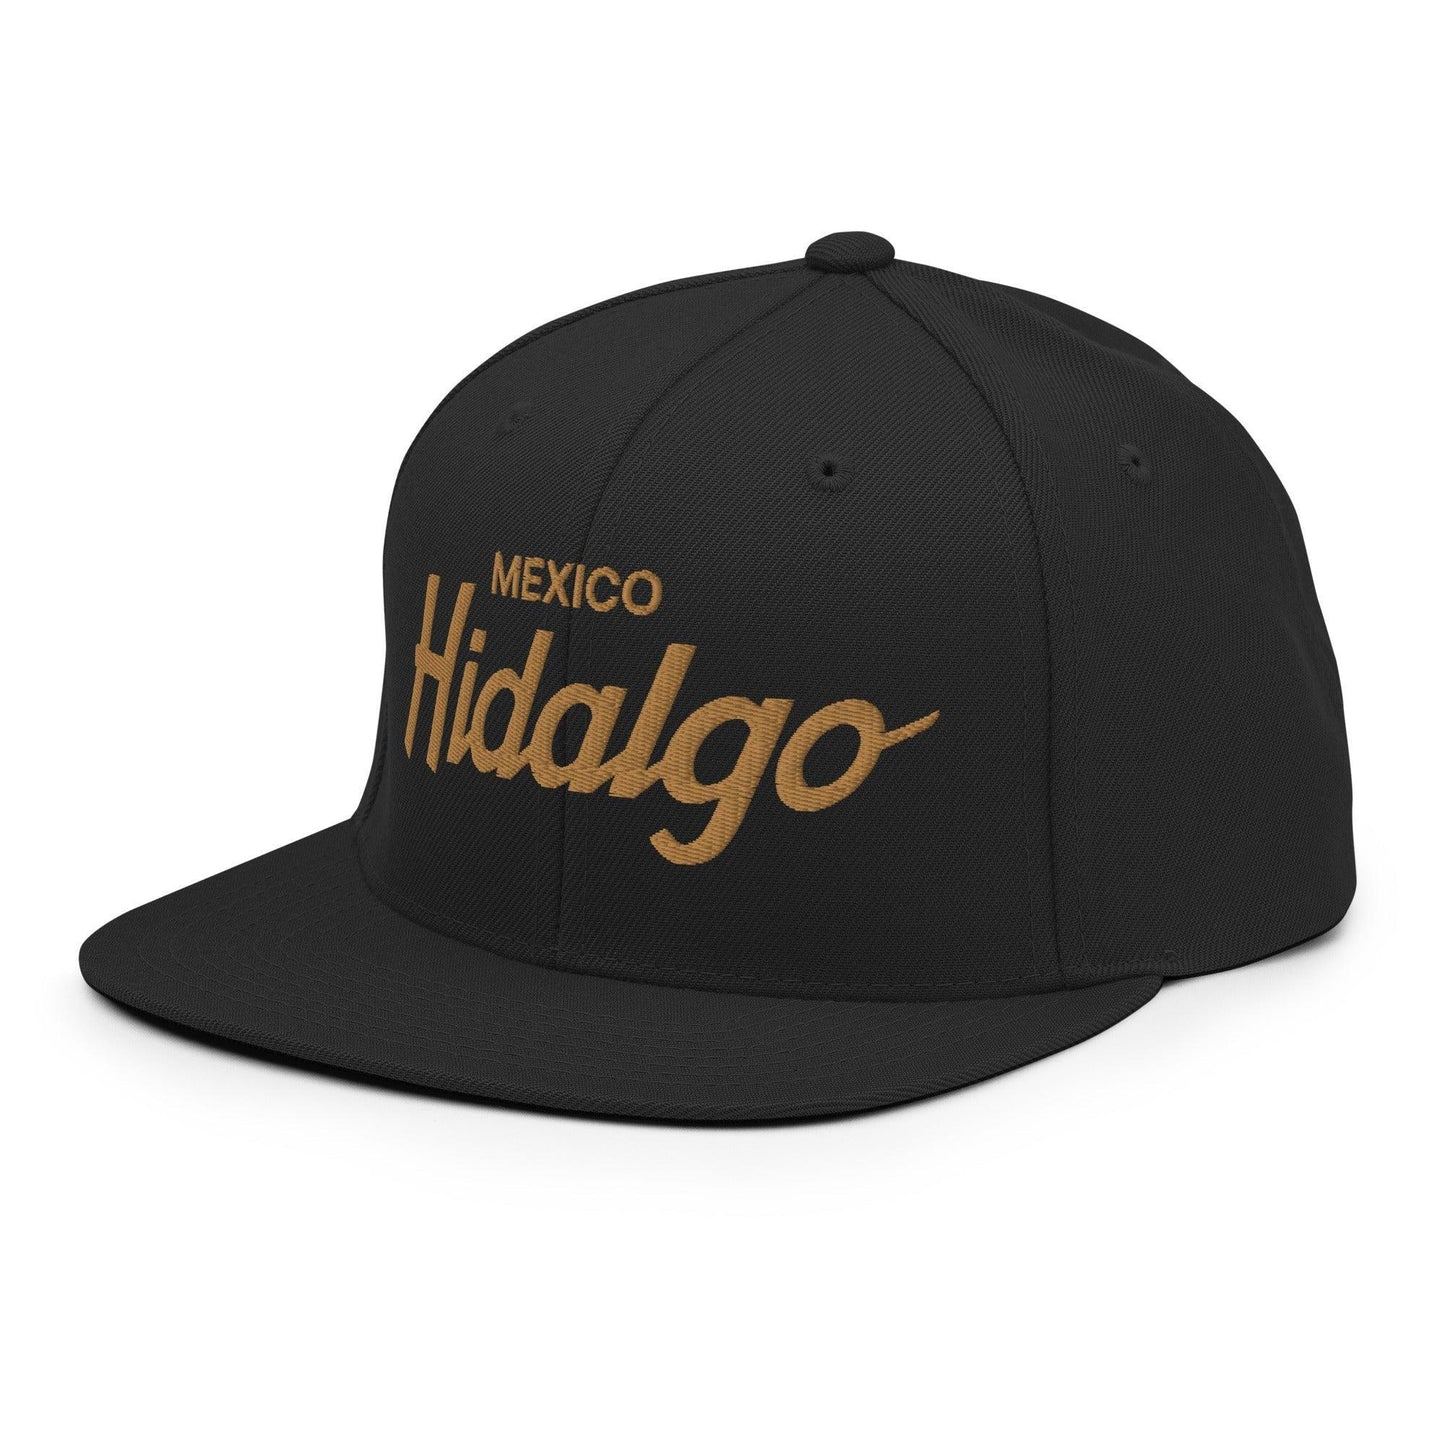 Hidalgo Mexico Gold Vintage Sports Script Snapback Hat Black